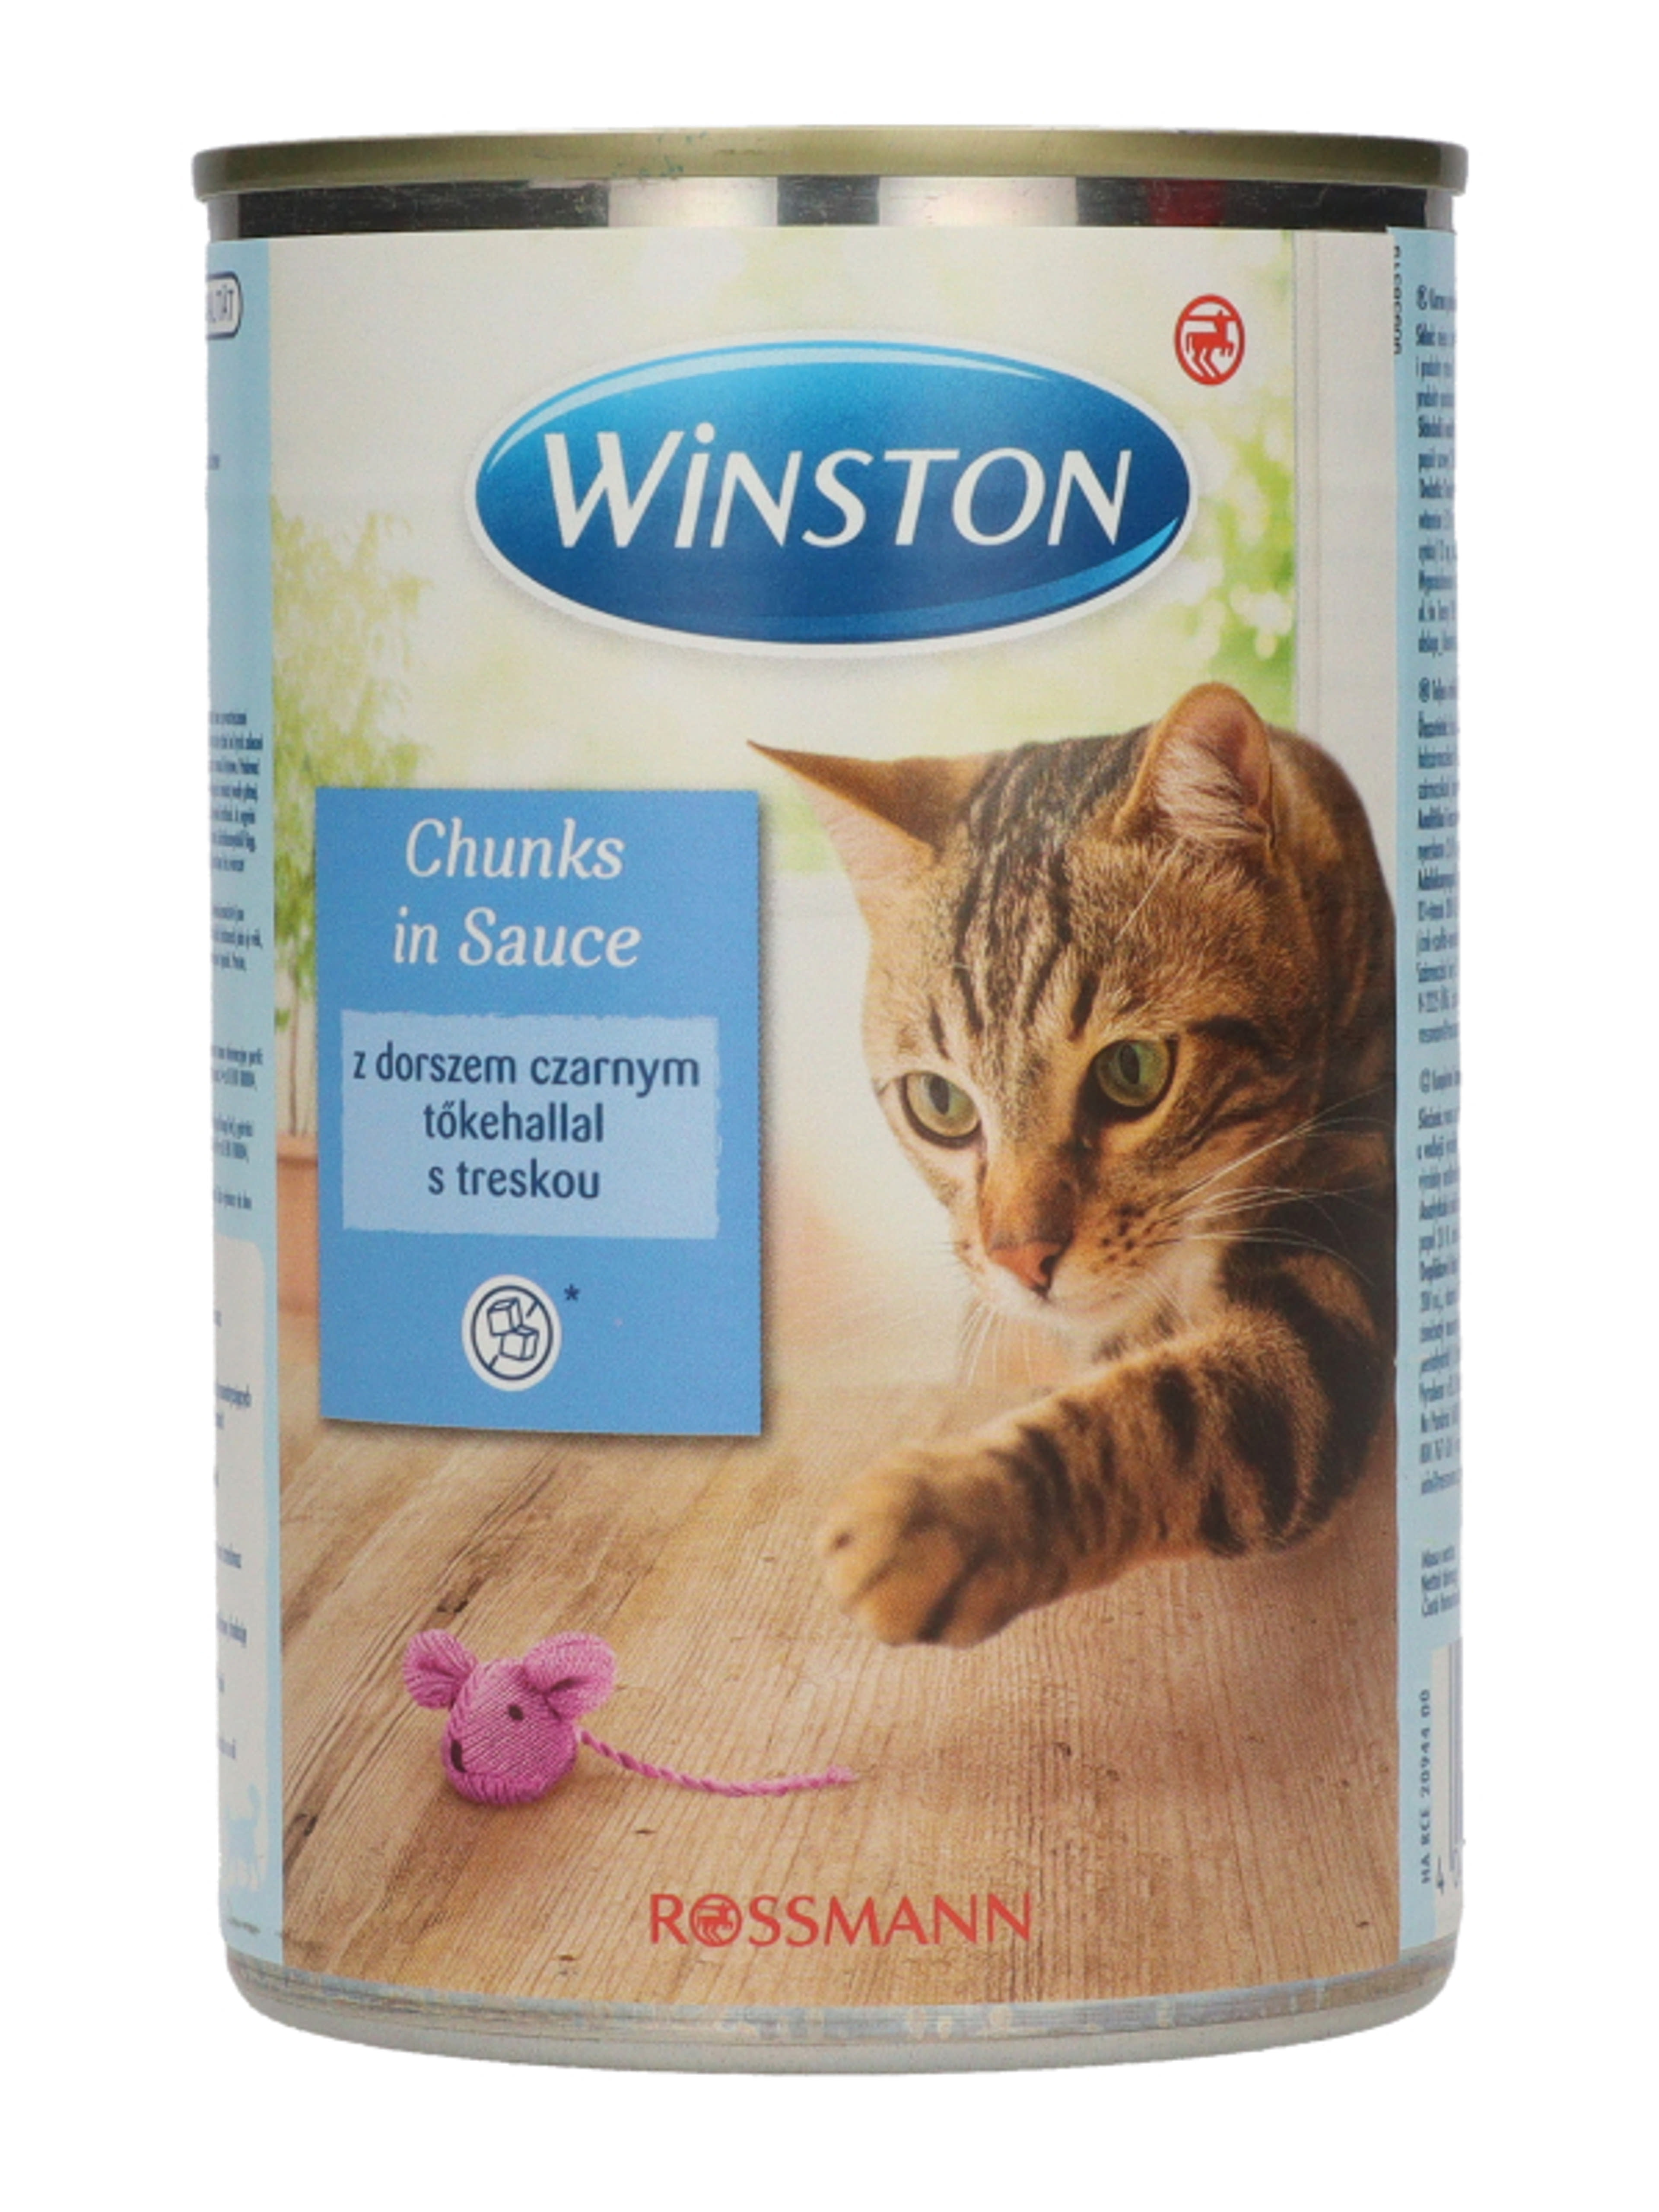 Winston konzerv macskáknak, lazaccal - 400 g-4